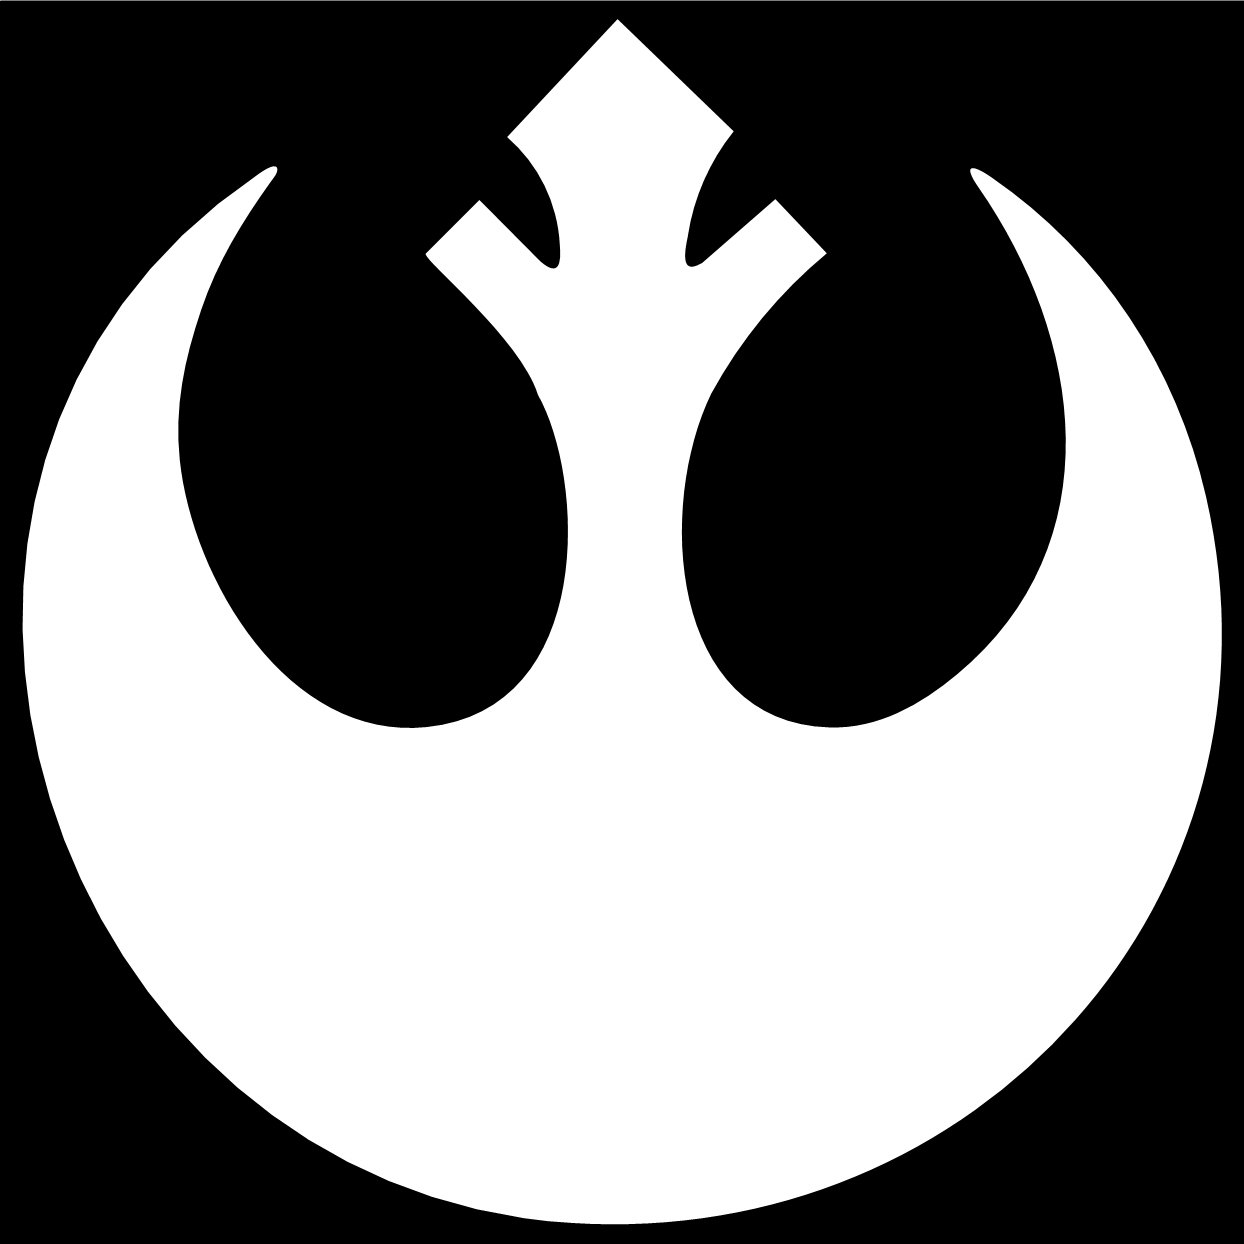 Star Wars Rebel Logo Vinyl Decal Sticker ANY COLOR